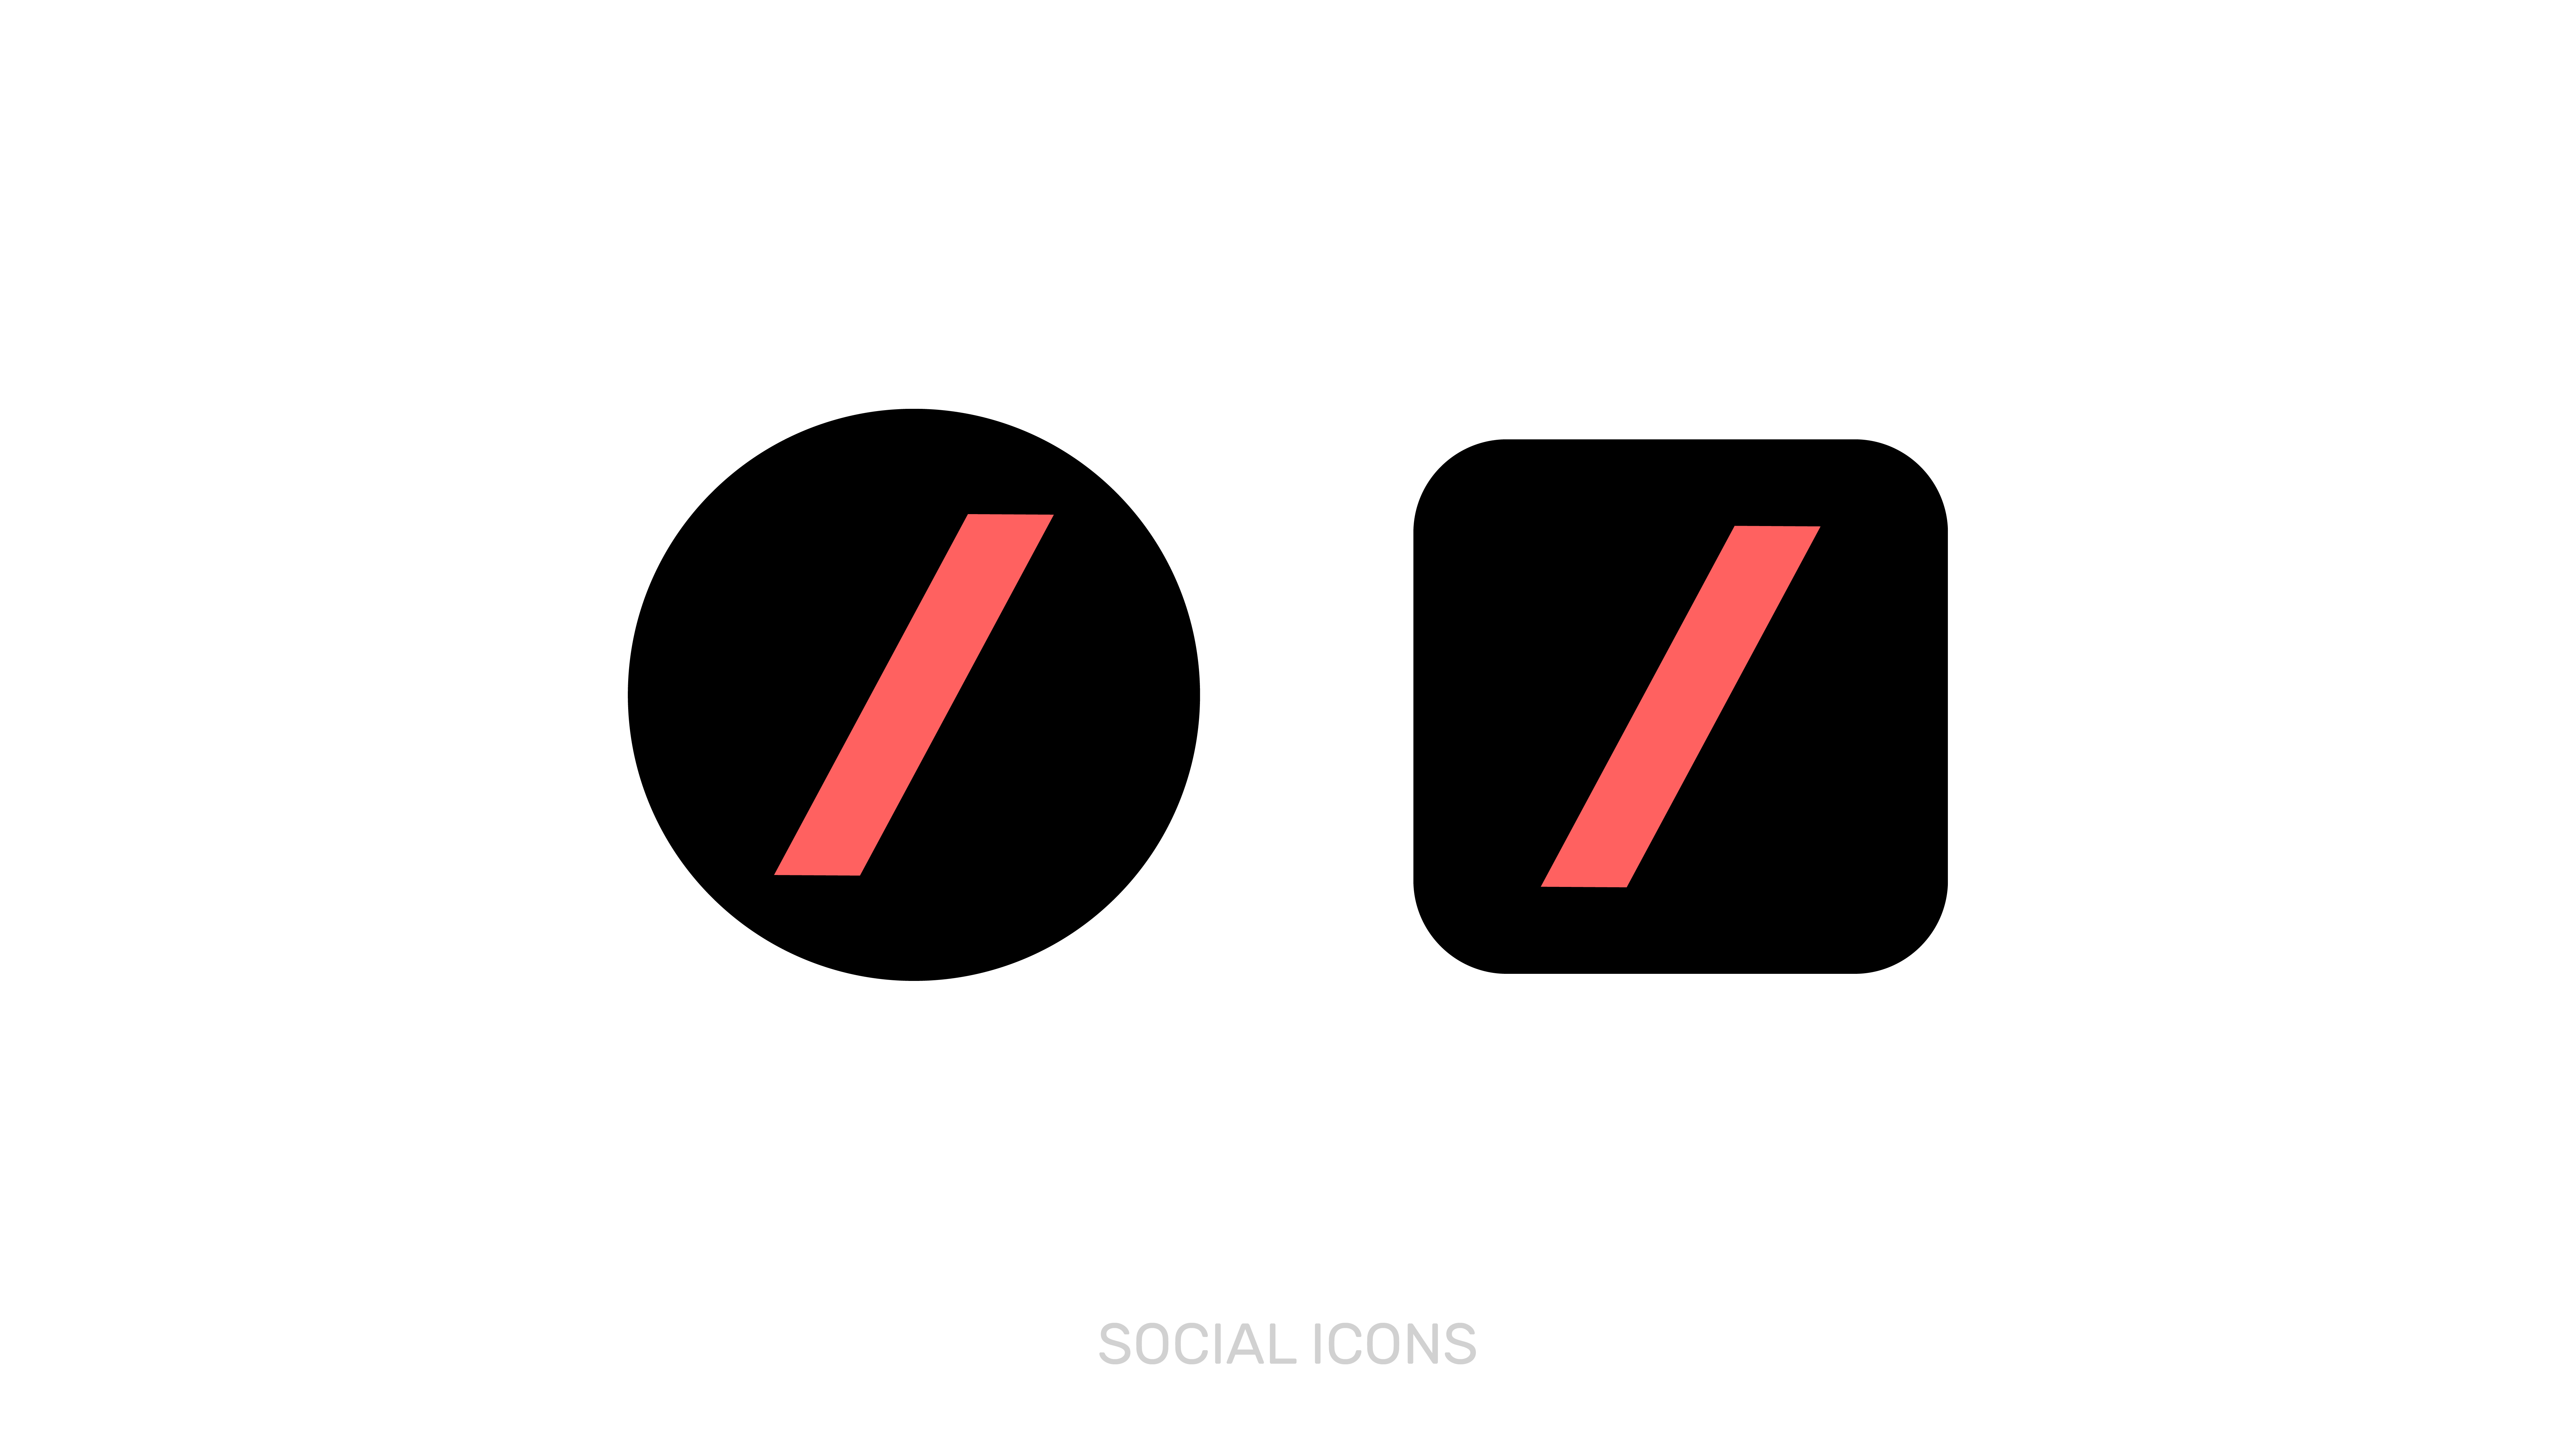 GoGo Social Icons